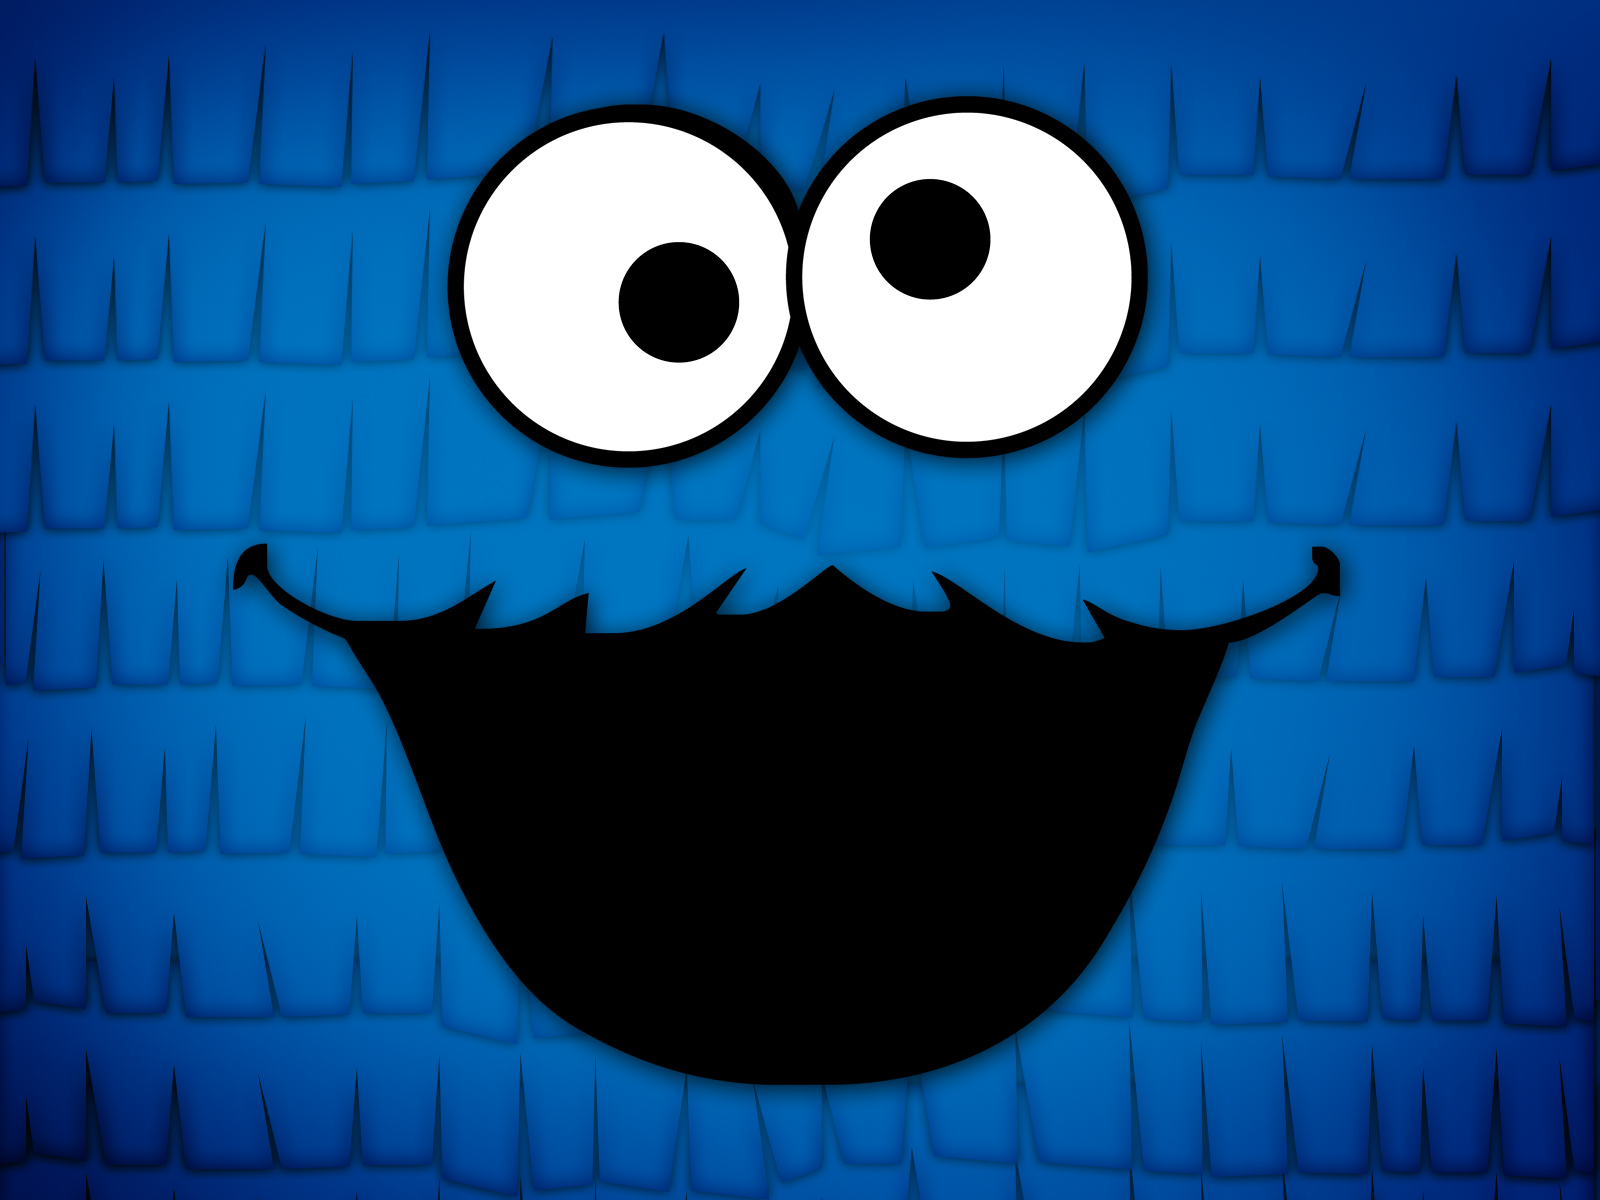 Cookie Monster wallpaper hd free download